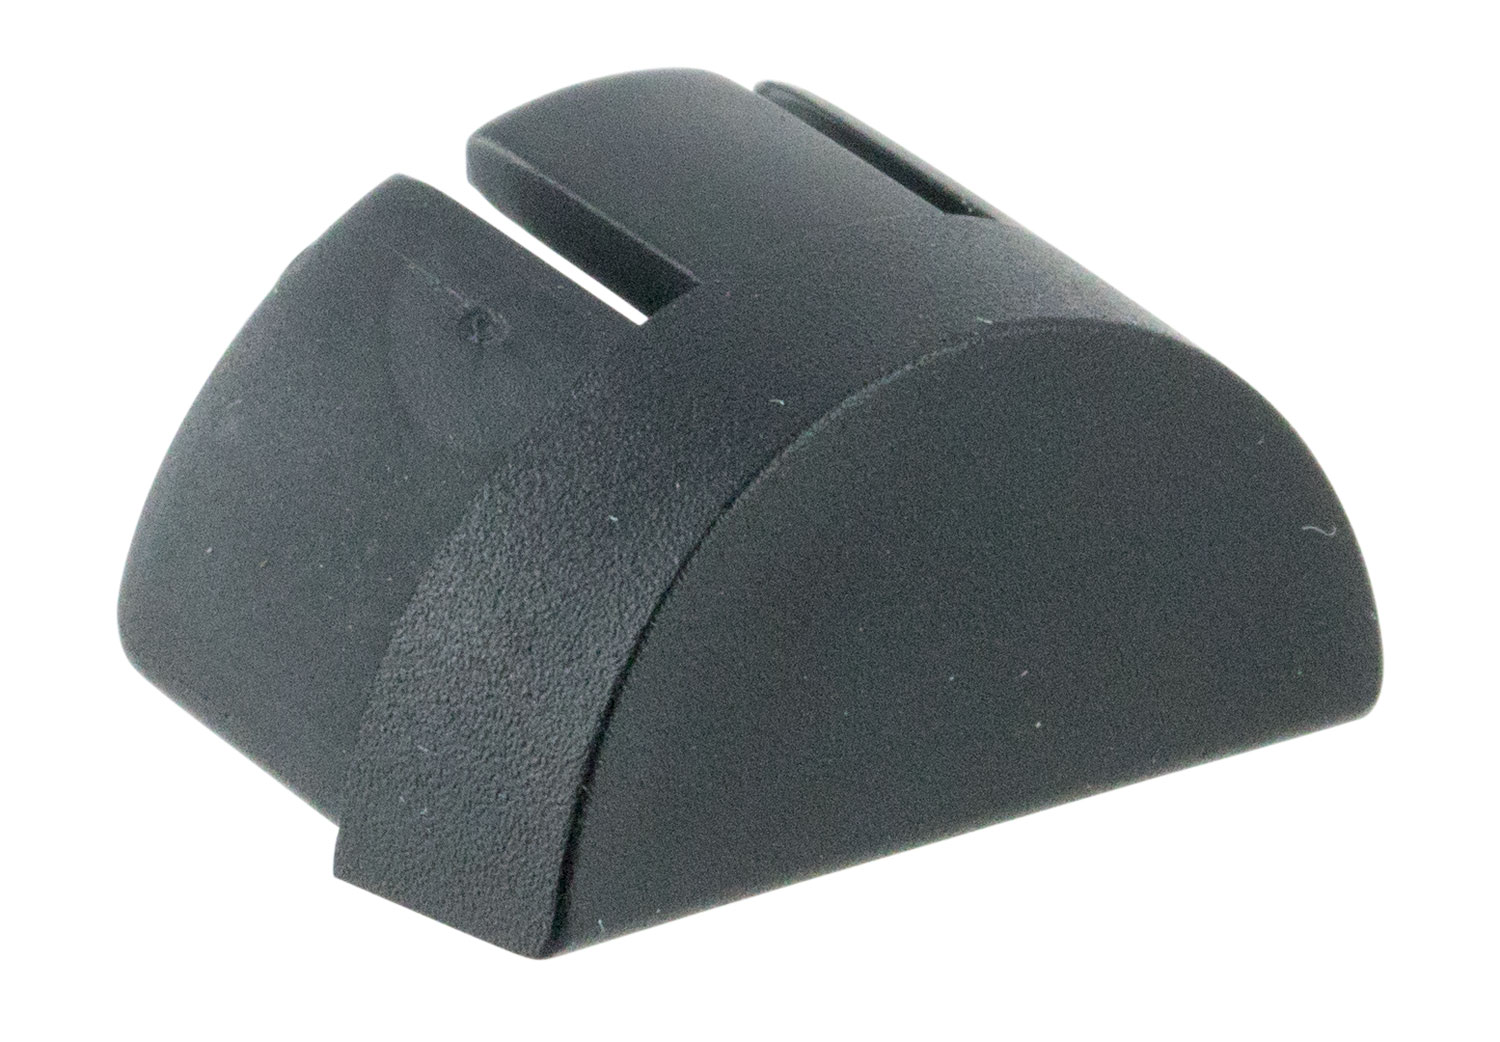 Pearce Grip PGGFISC Grip Frame Insert  Black Polymer for Glock 26, 27, 33, 38, 39